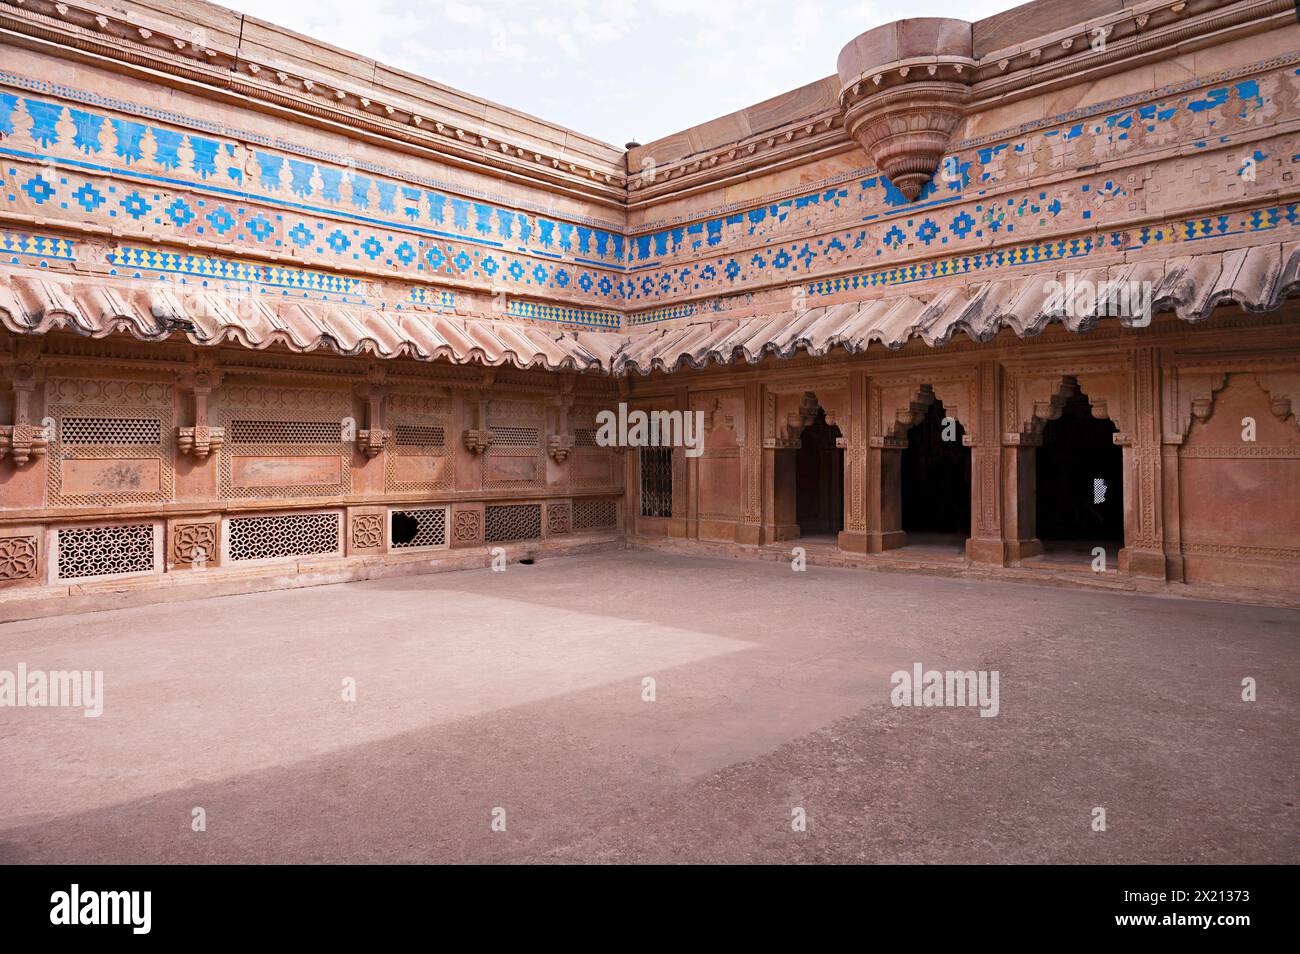 Intérieurs, Man Mandir Palace, Fort Complex, Gwalior, Madhya Pradesh, Inde Banque D'Images